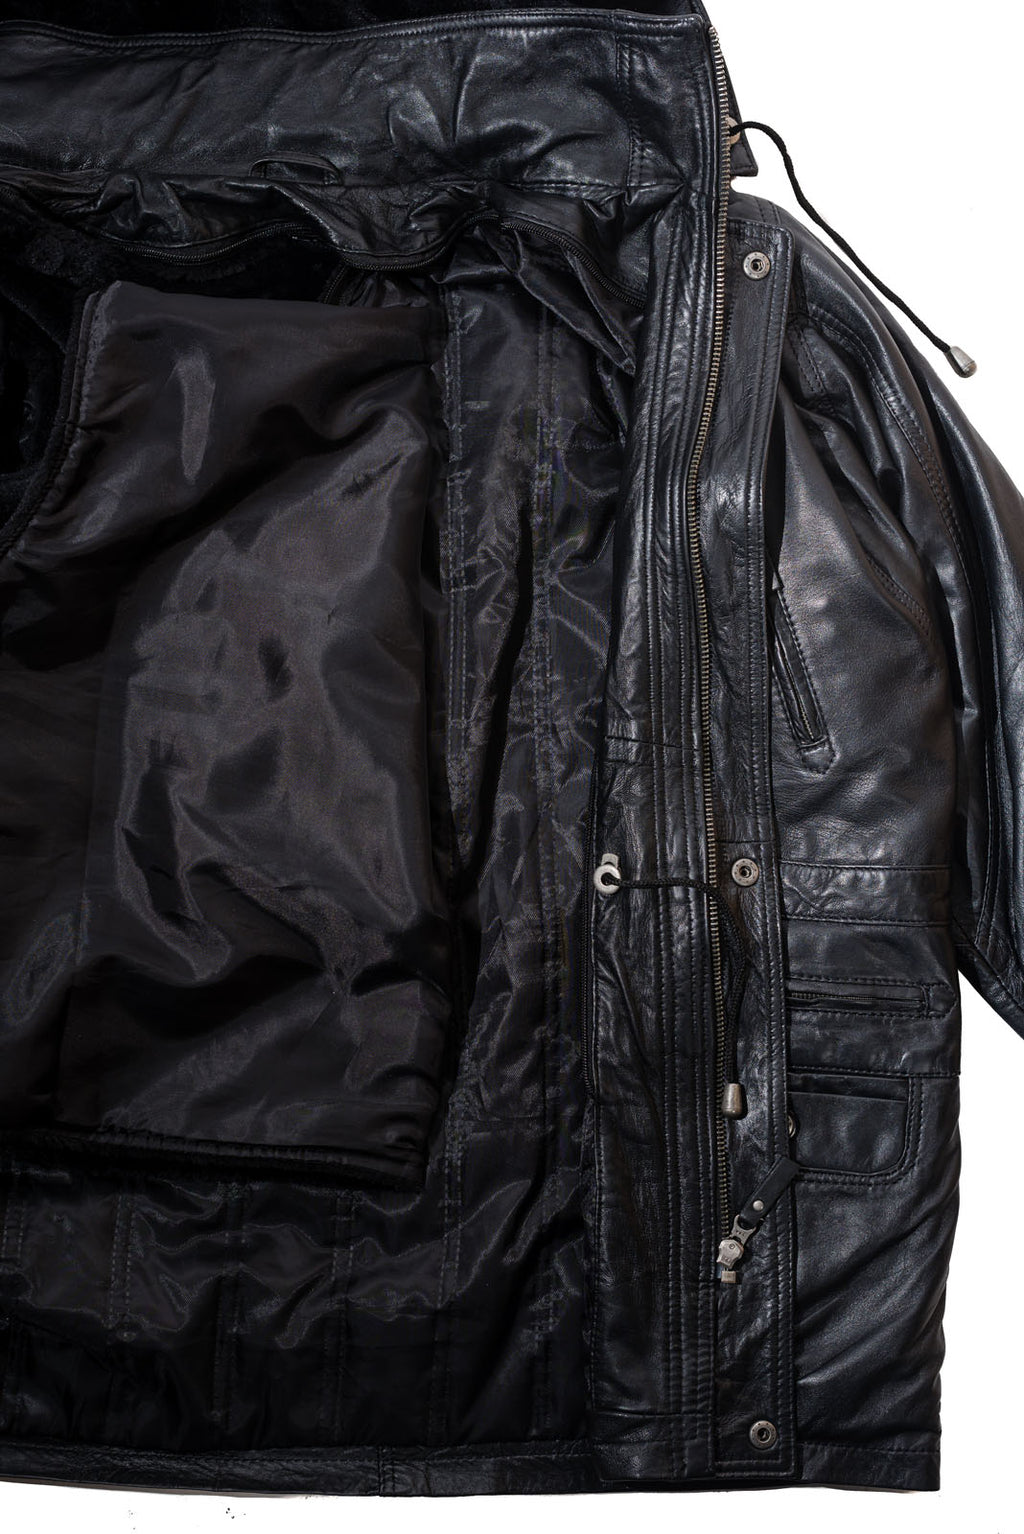 Men's Black Multi-Season Leather Coat with Detachable Hood: Christiano